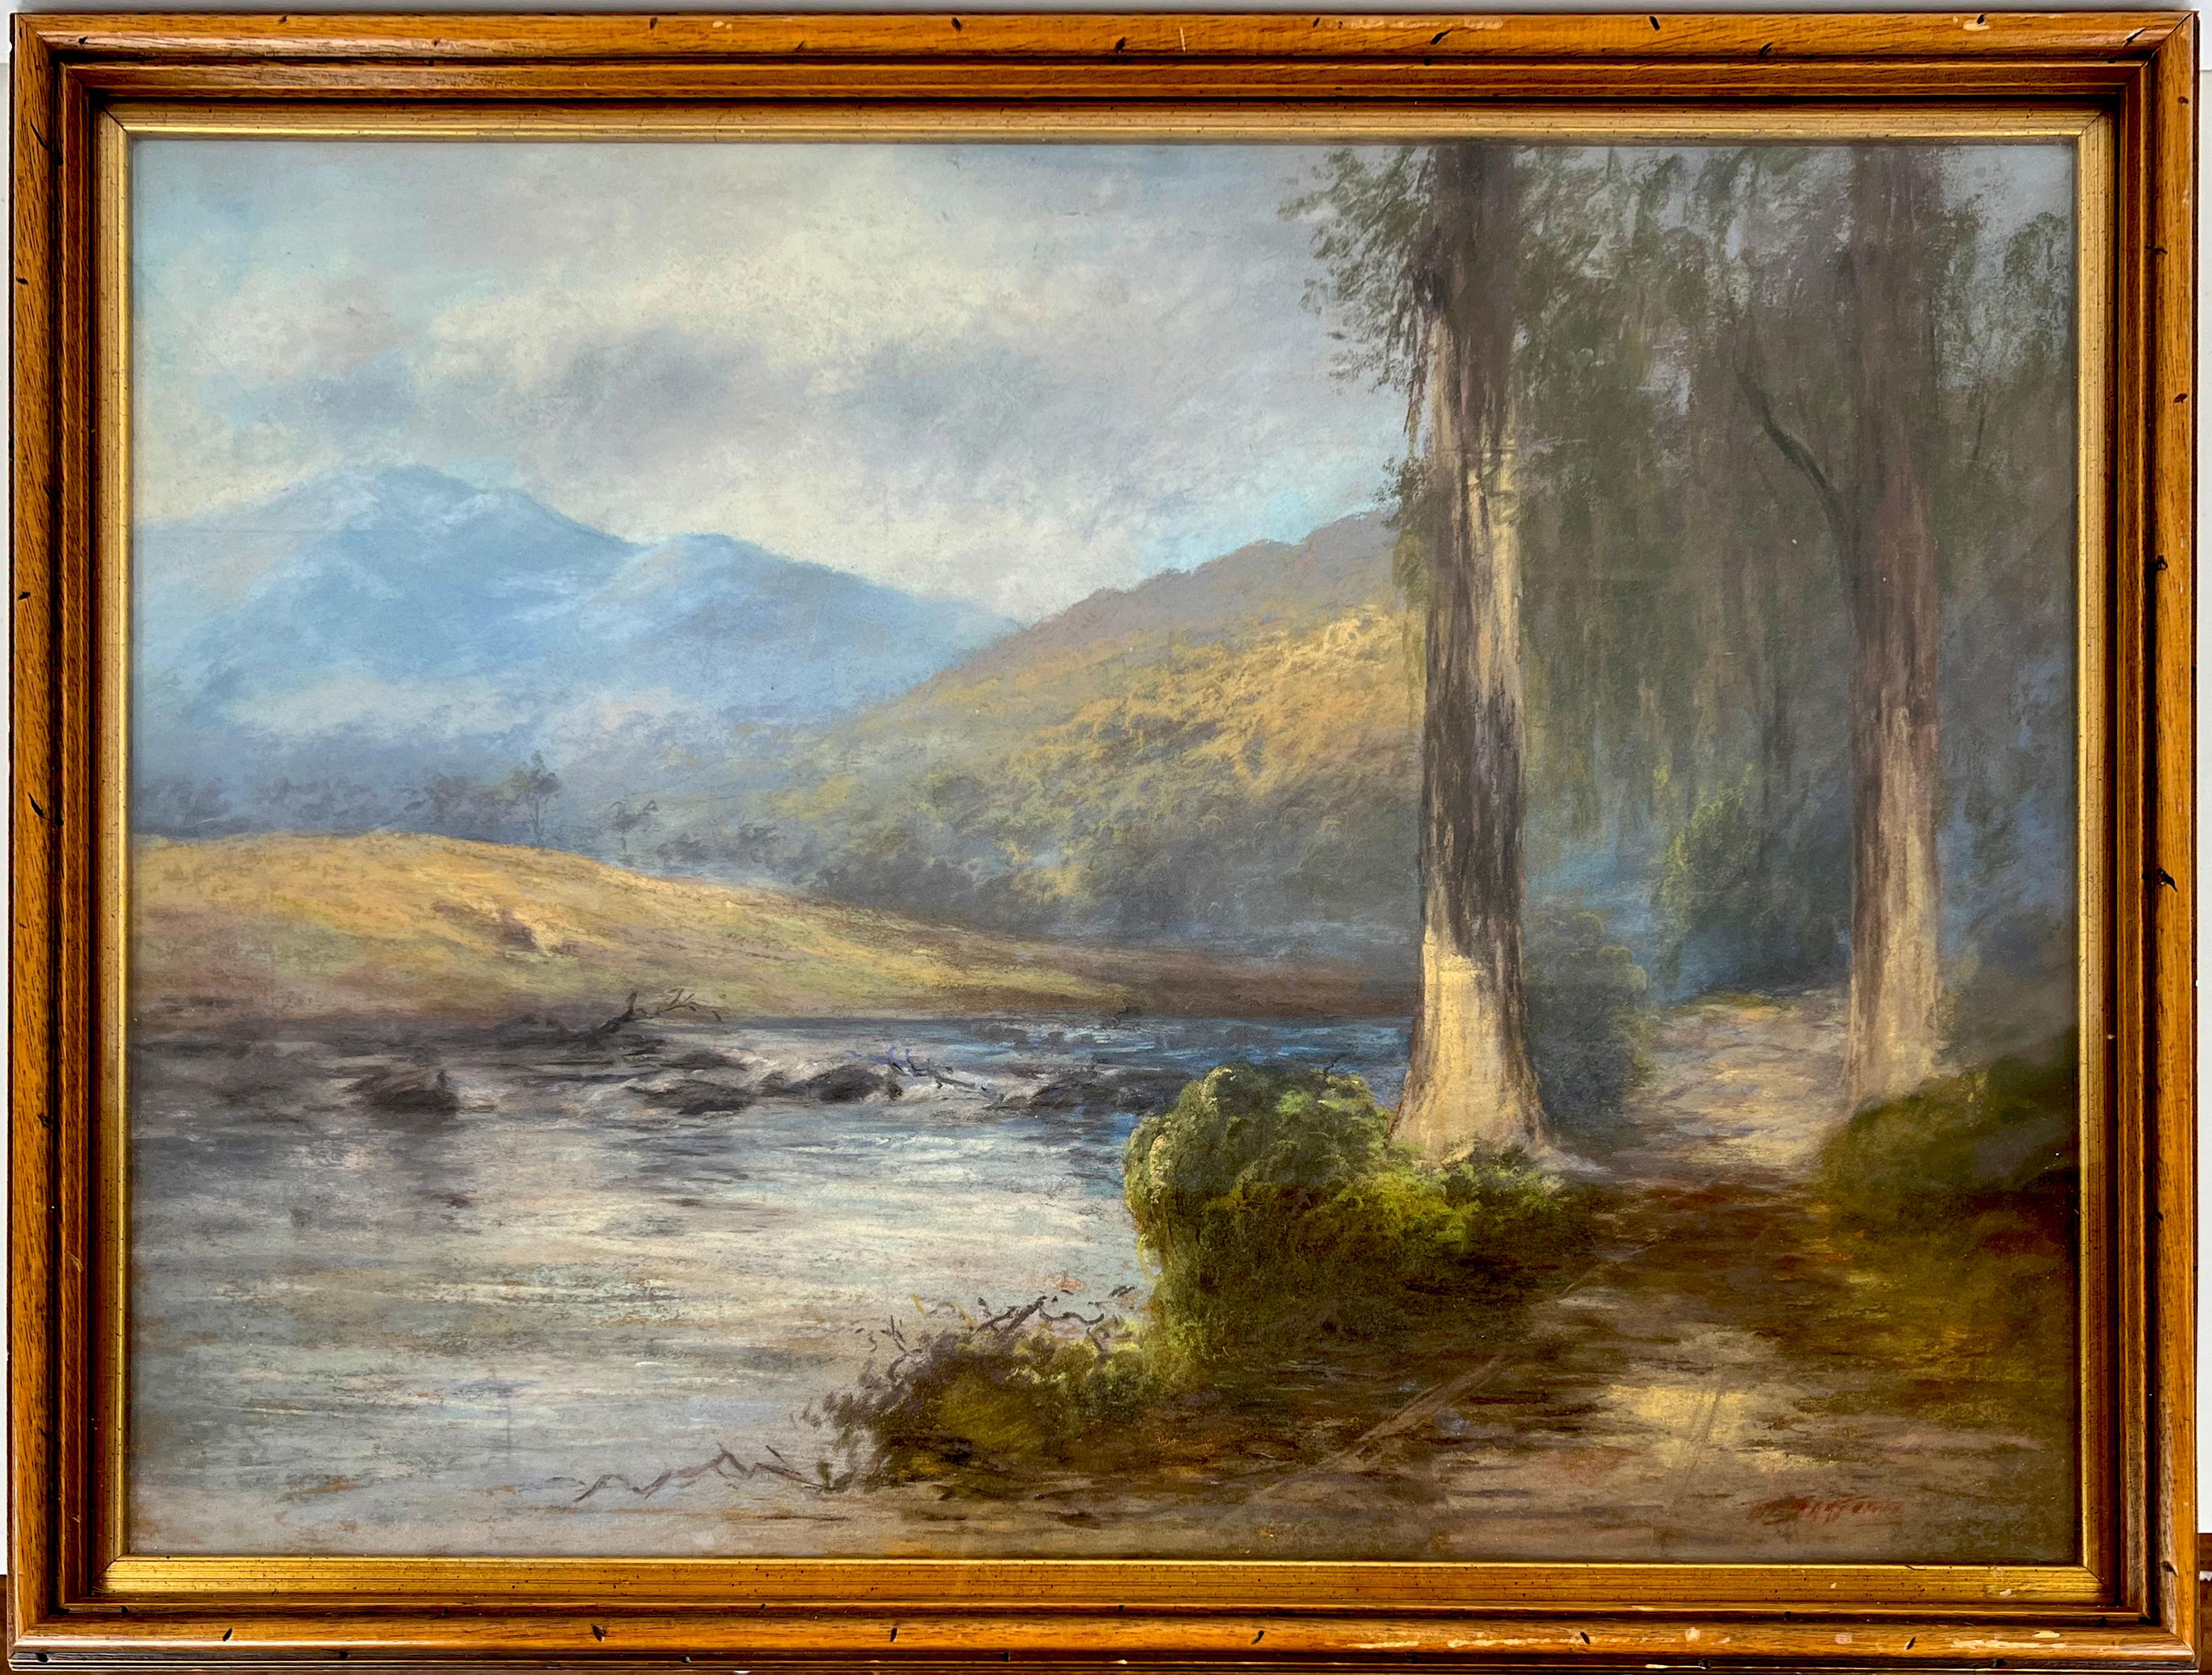 Mt. Tamalpais and Stream in the Spring circa 1900